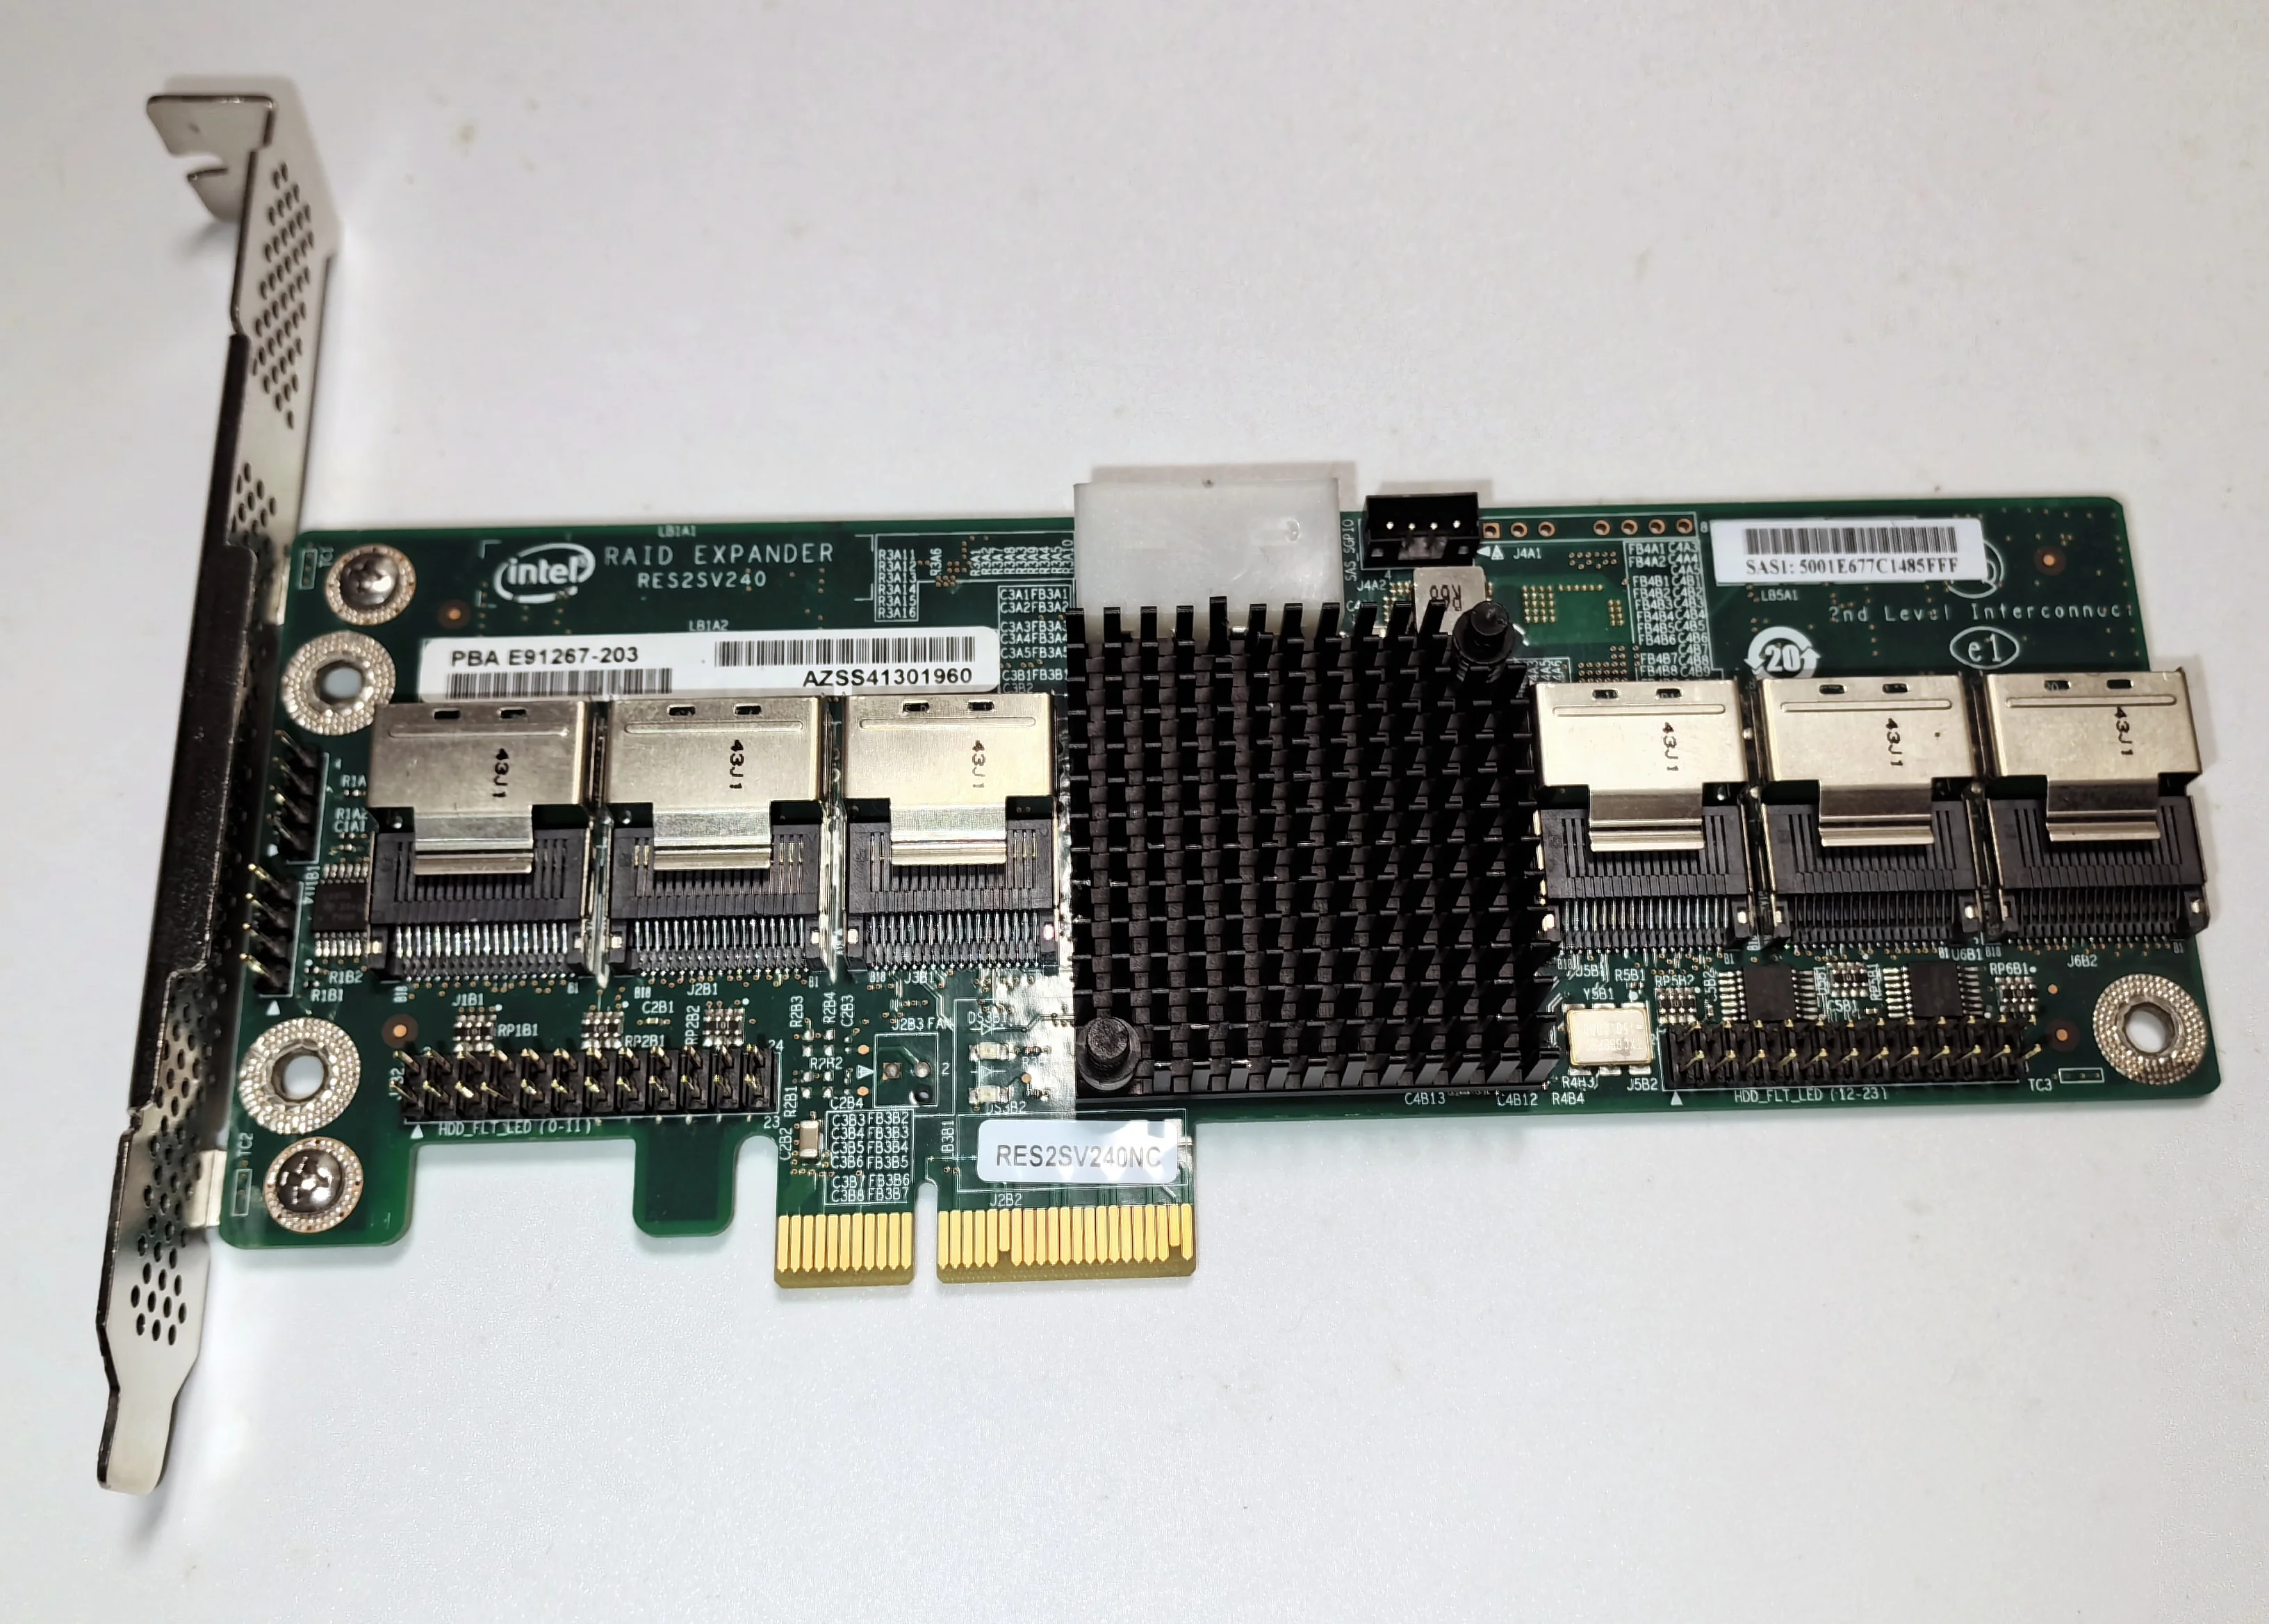 

Intel RES2SV240 24port 6G 6Gbps SATA SAS Expander Server Adapter RAID CARD